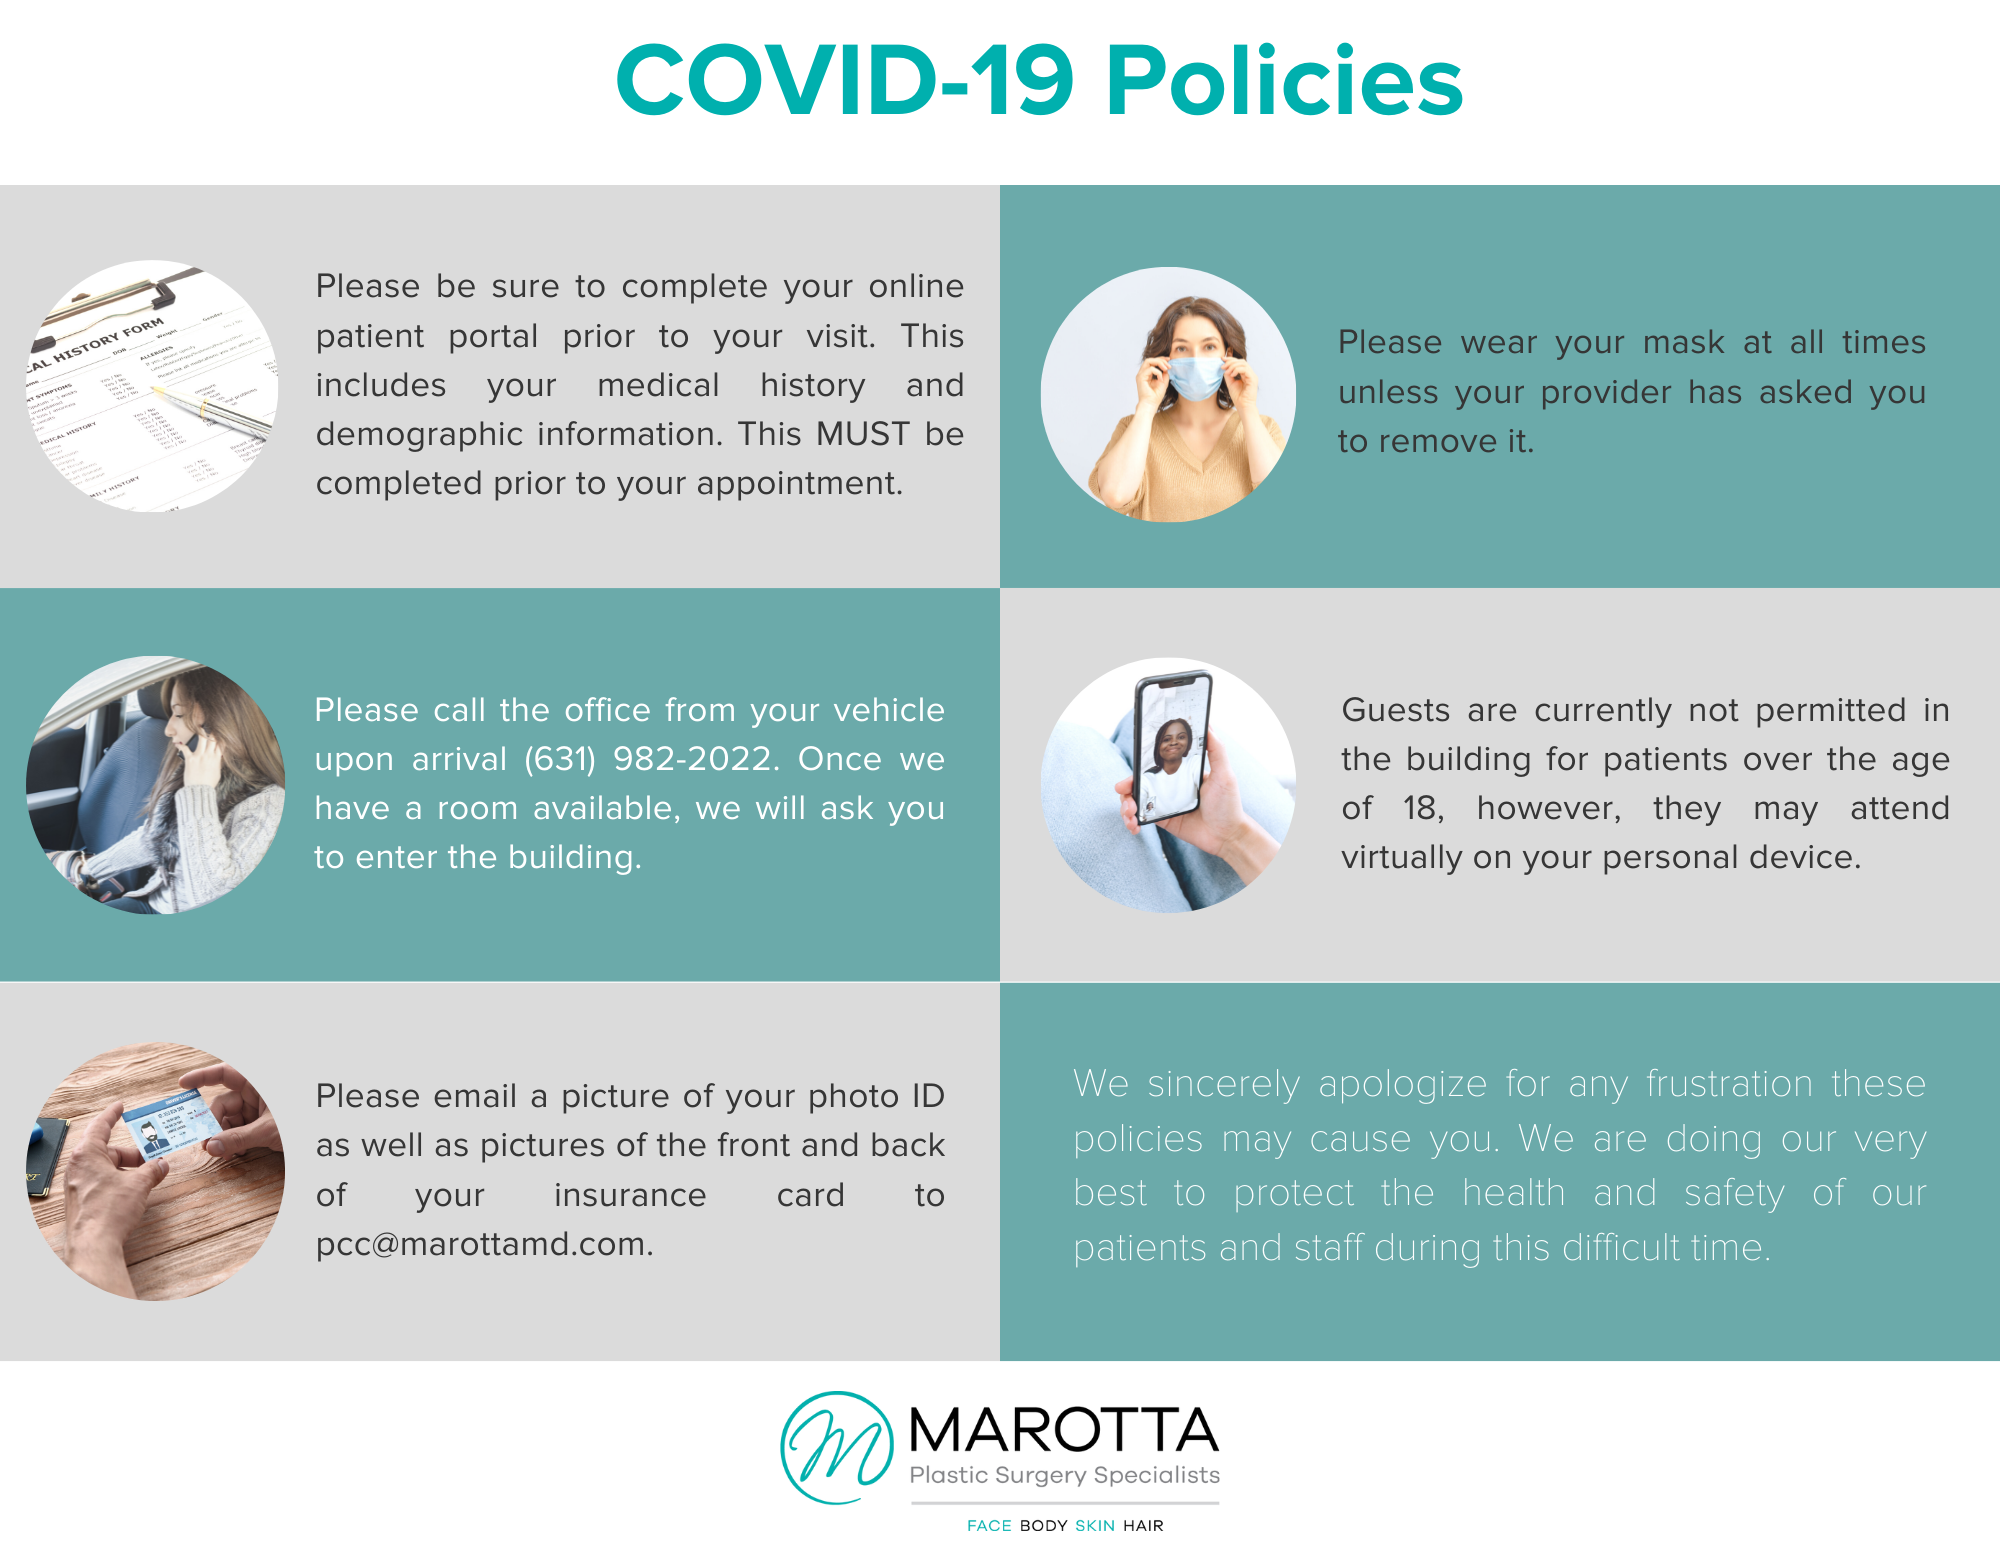 COVID policies information